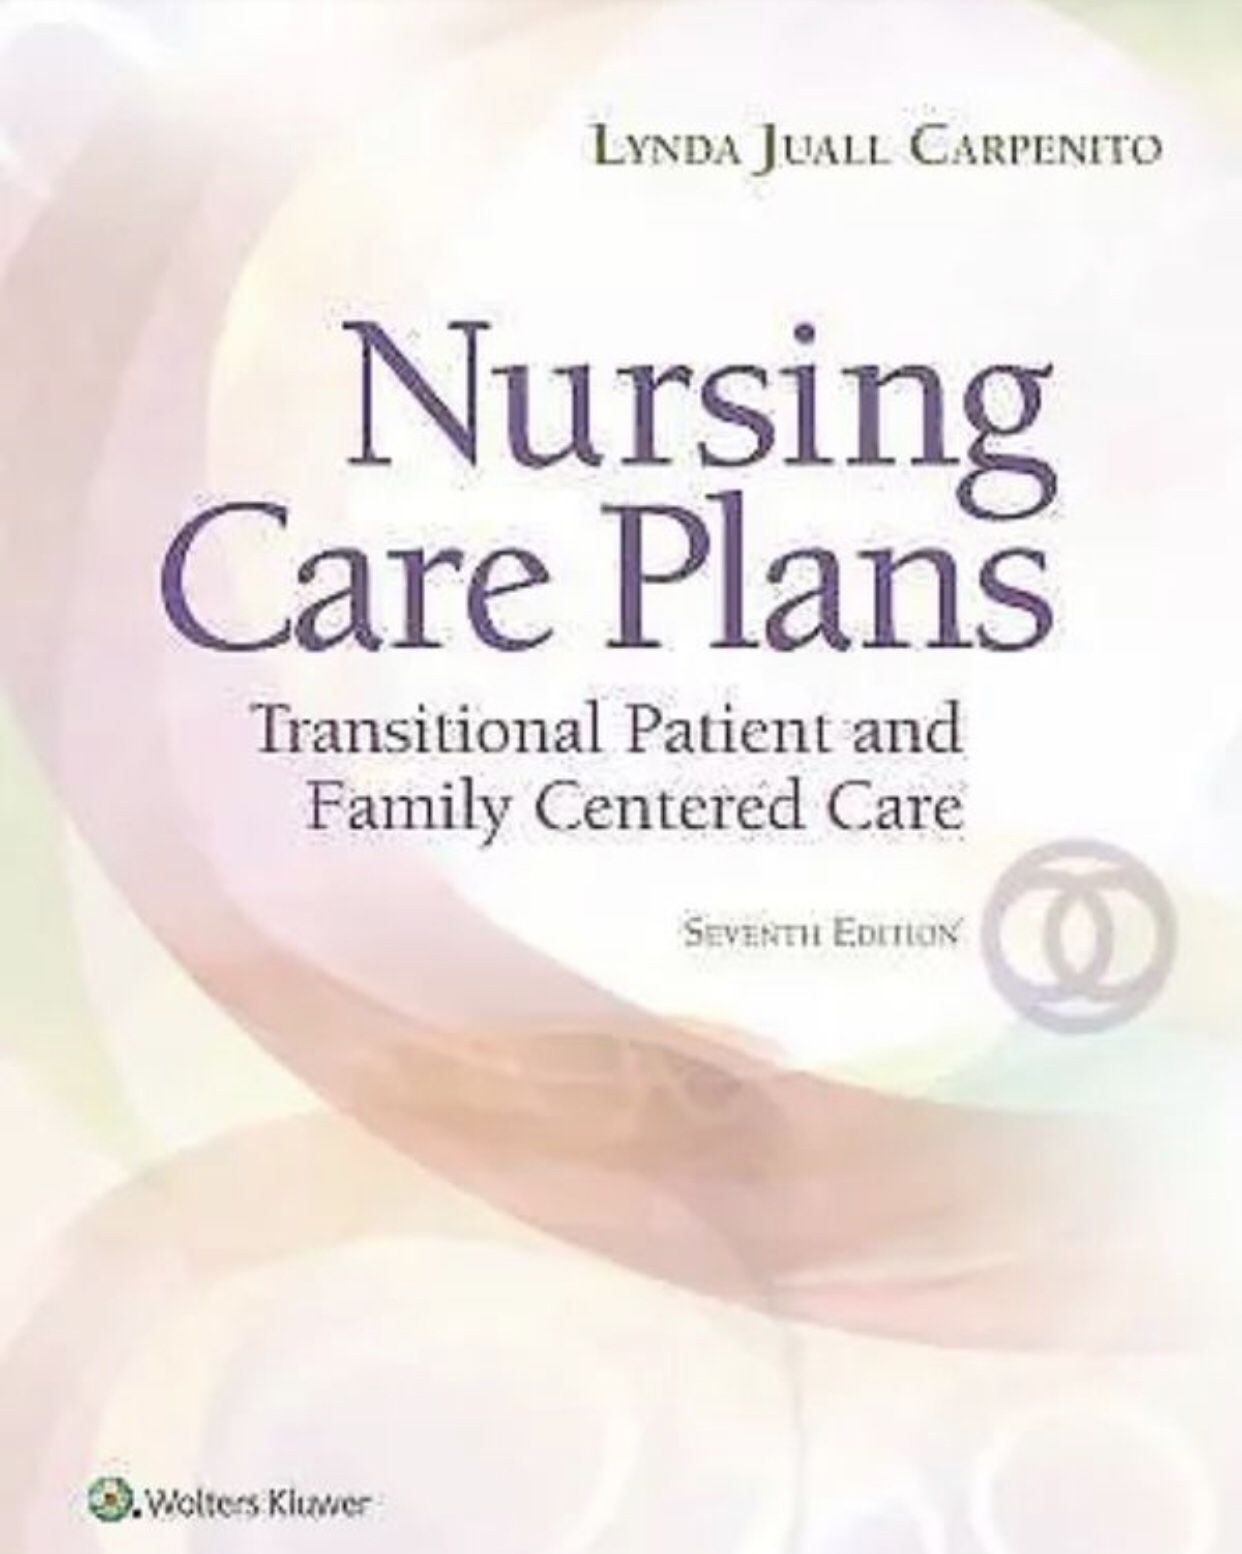 Nursing Care Plans by Lynda J. Carpenito (2017, Paperback, Revised)